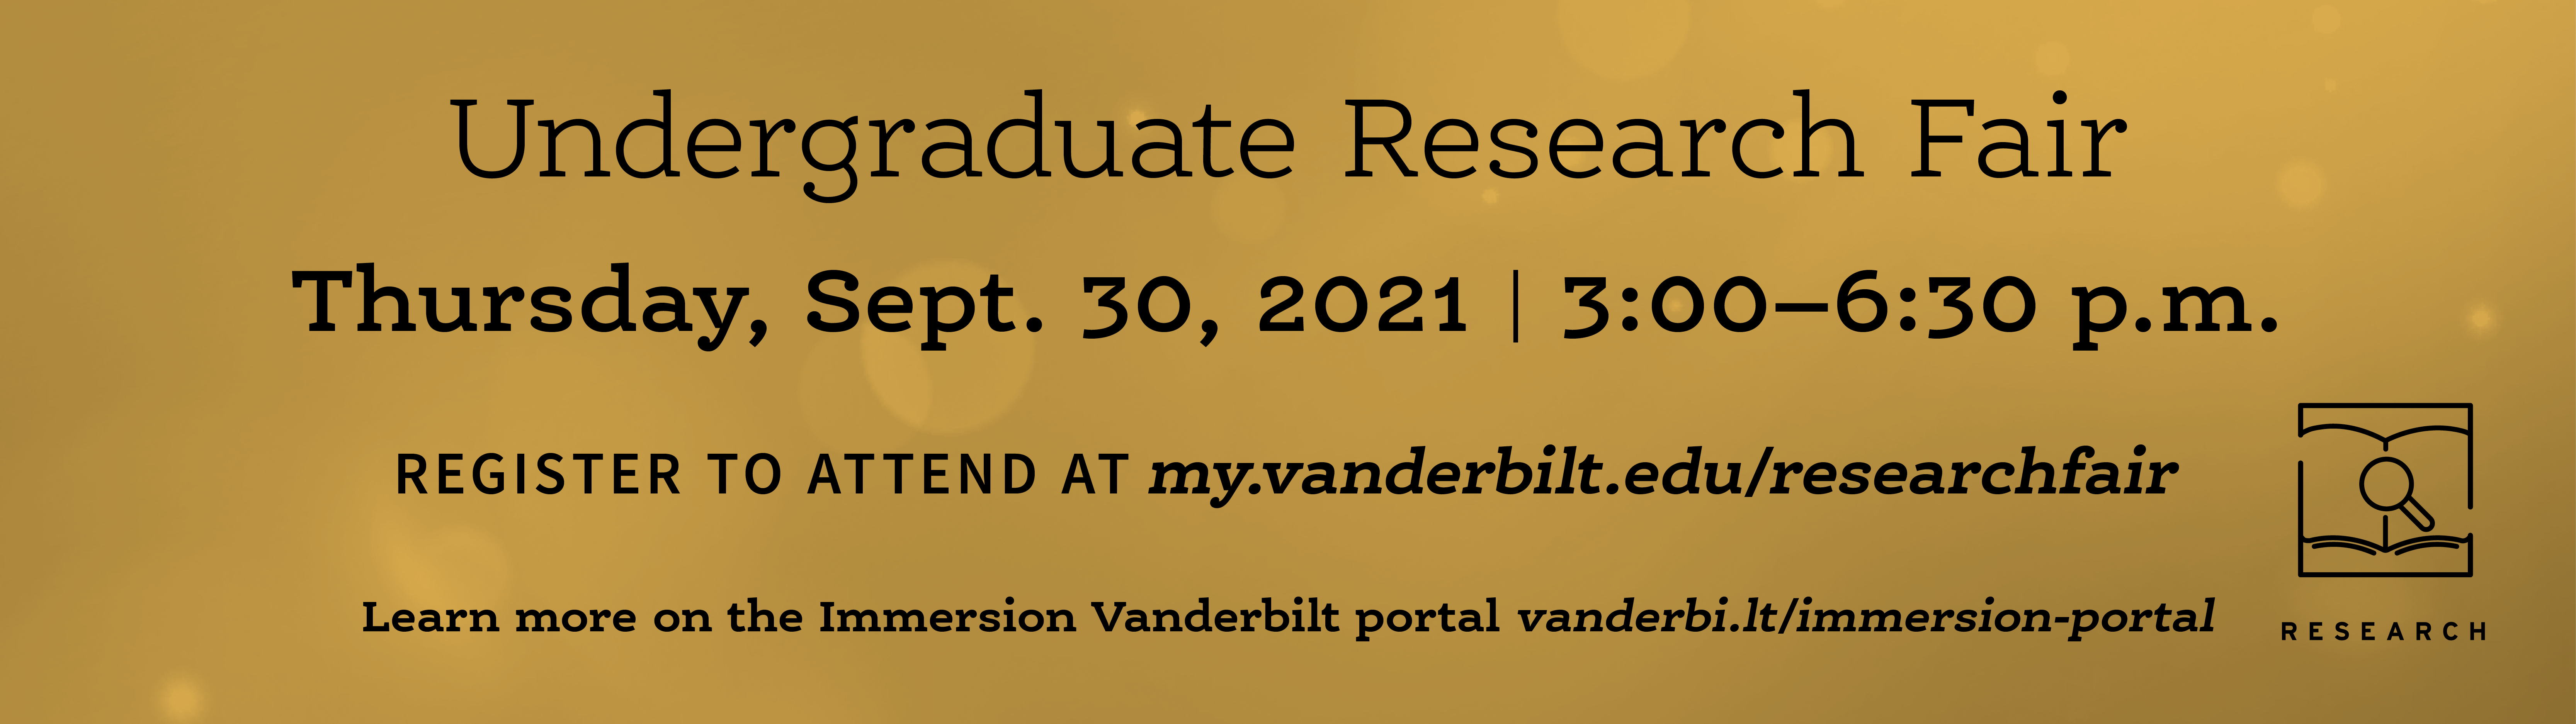 Undergraduate Research Fair (Fall 2021)_Web Banner_150 ppi